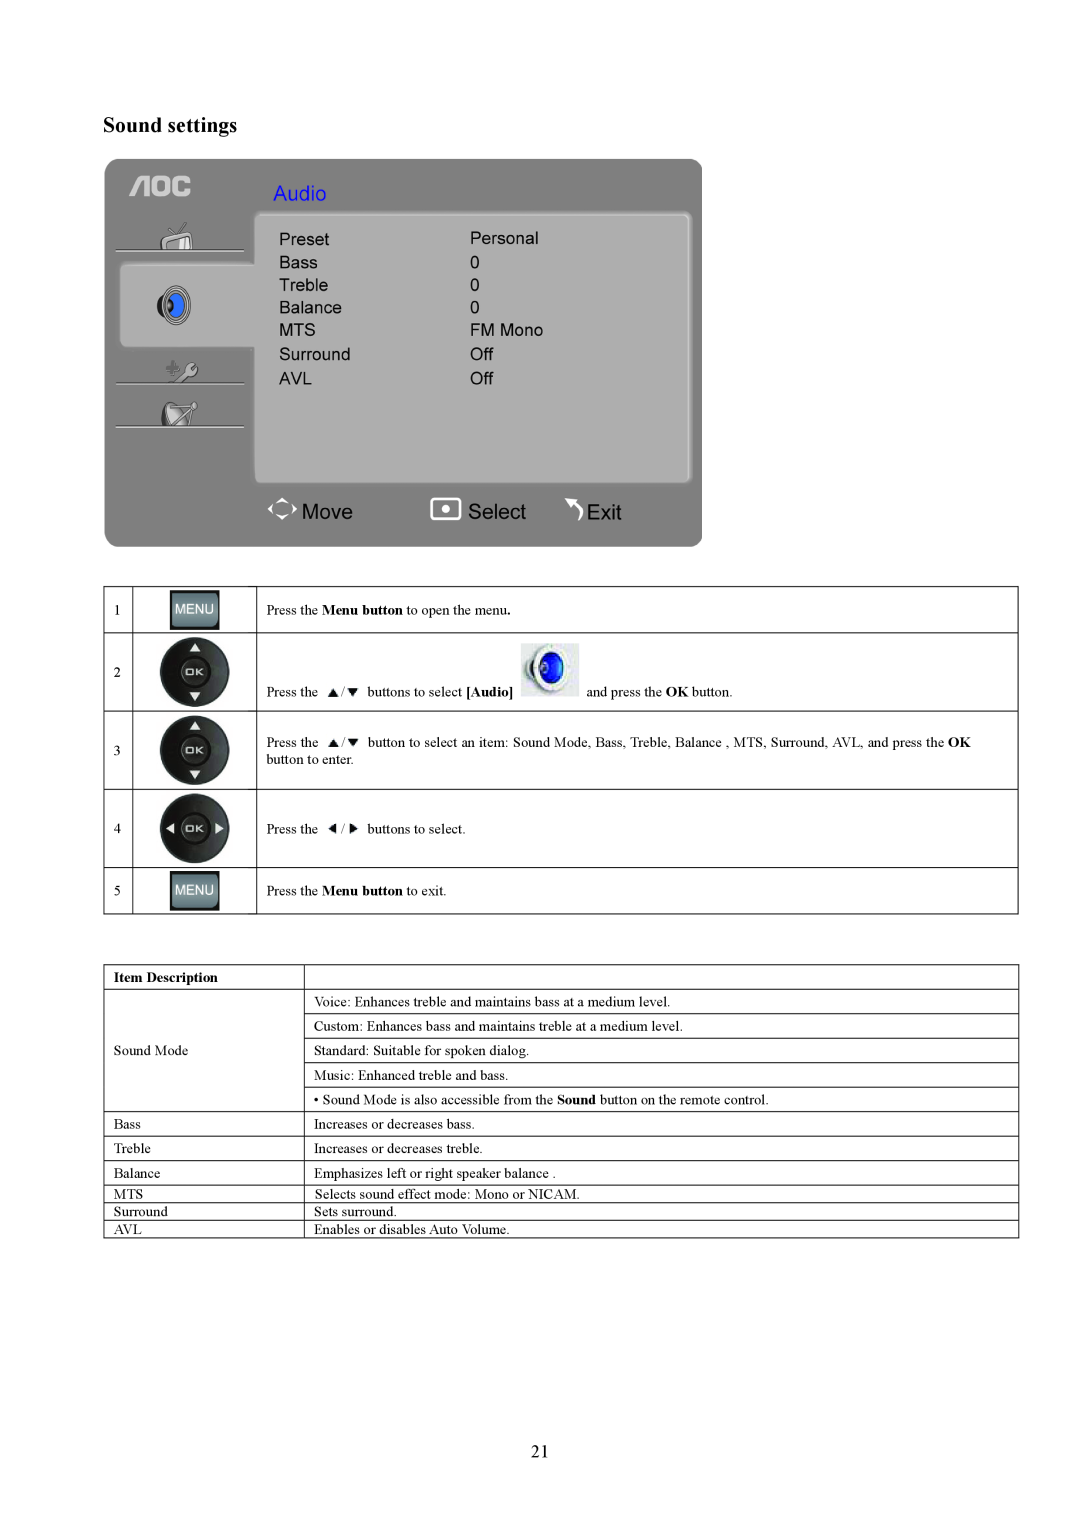 AOC T2242WE, T2442E manual Sound settings, Item Description, Selects sound effect mode Mono or NICAM 